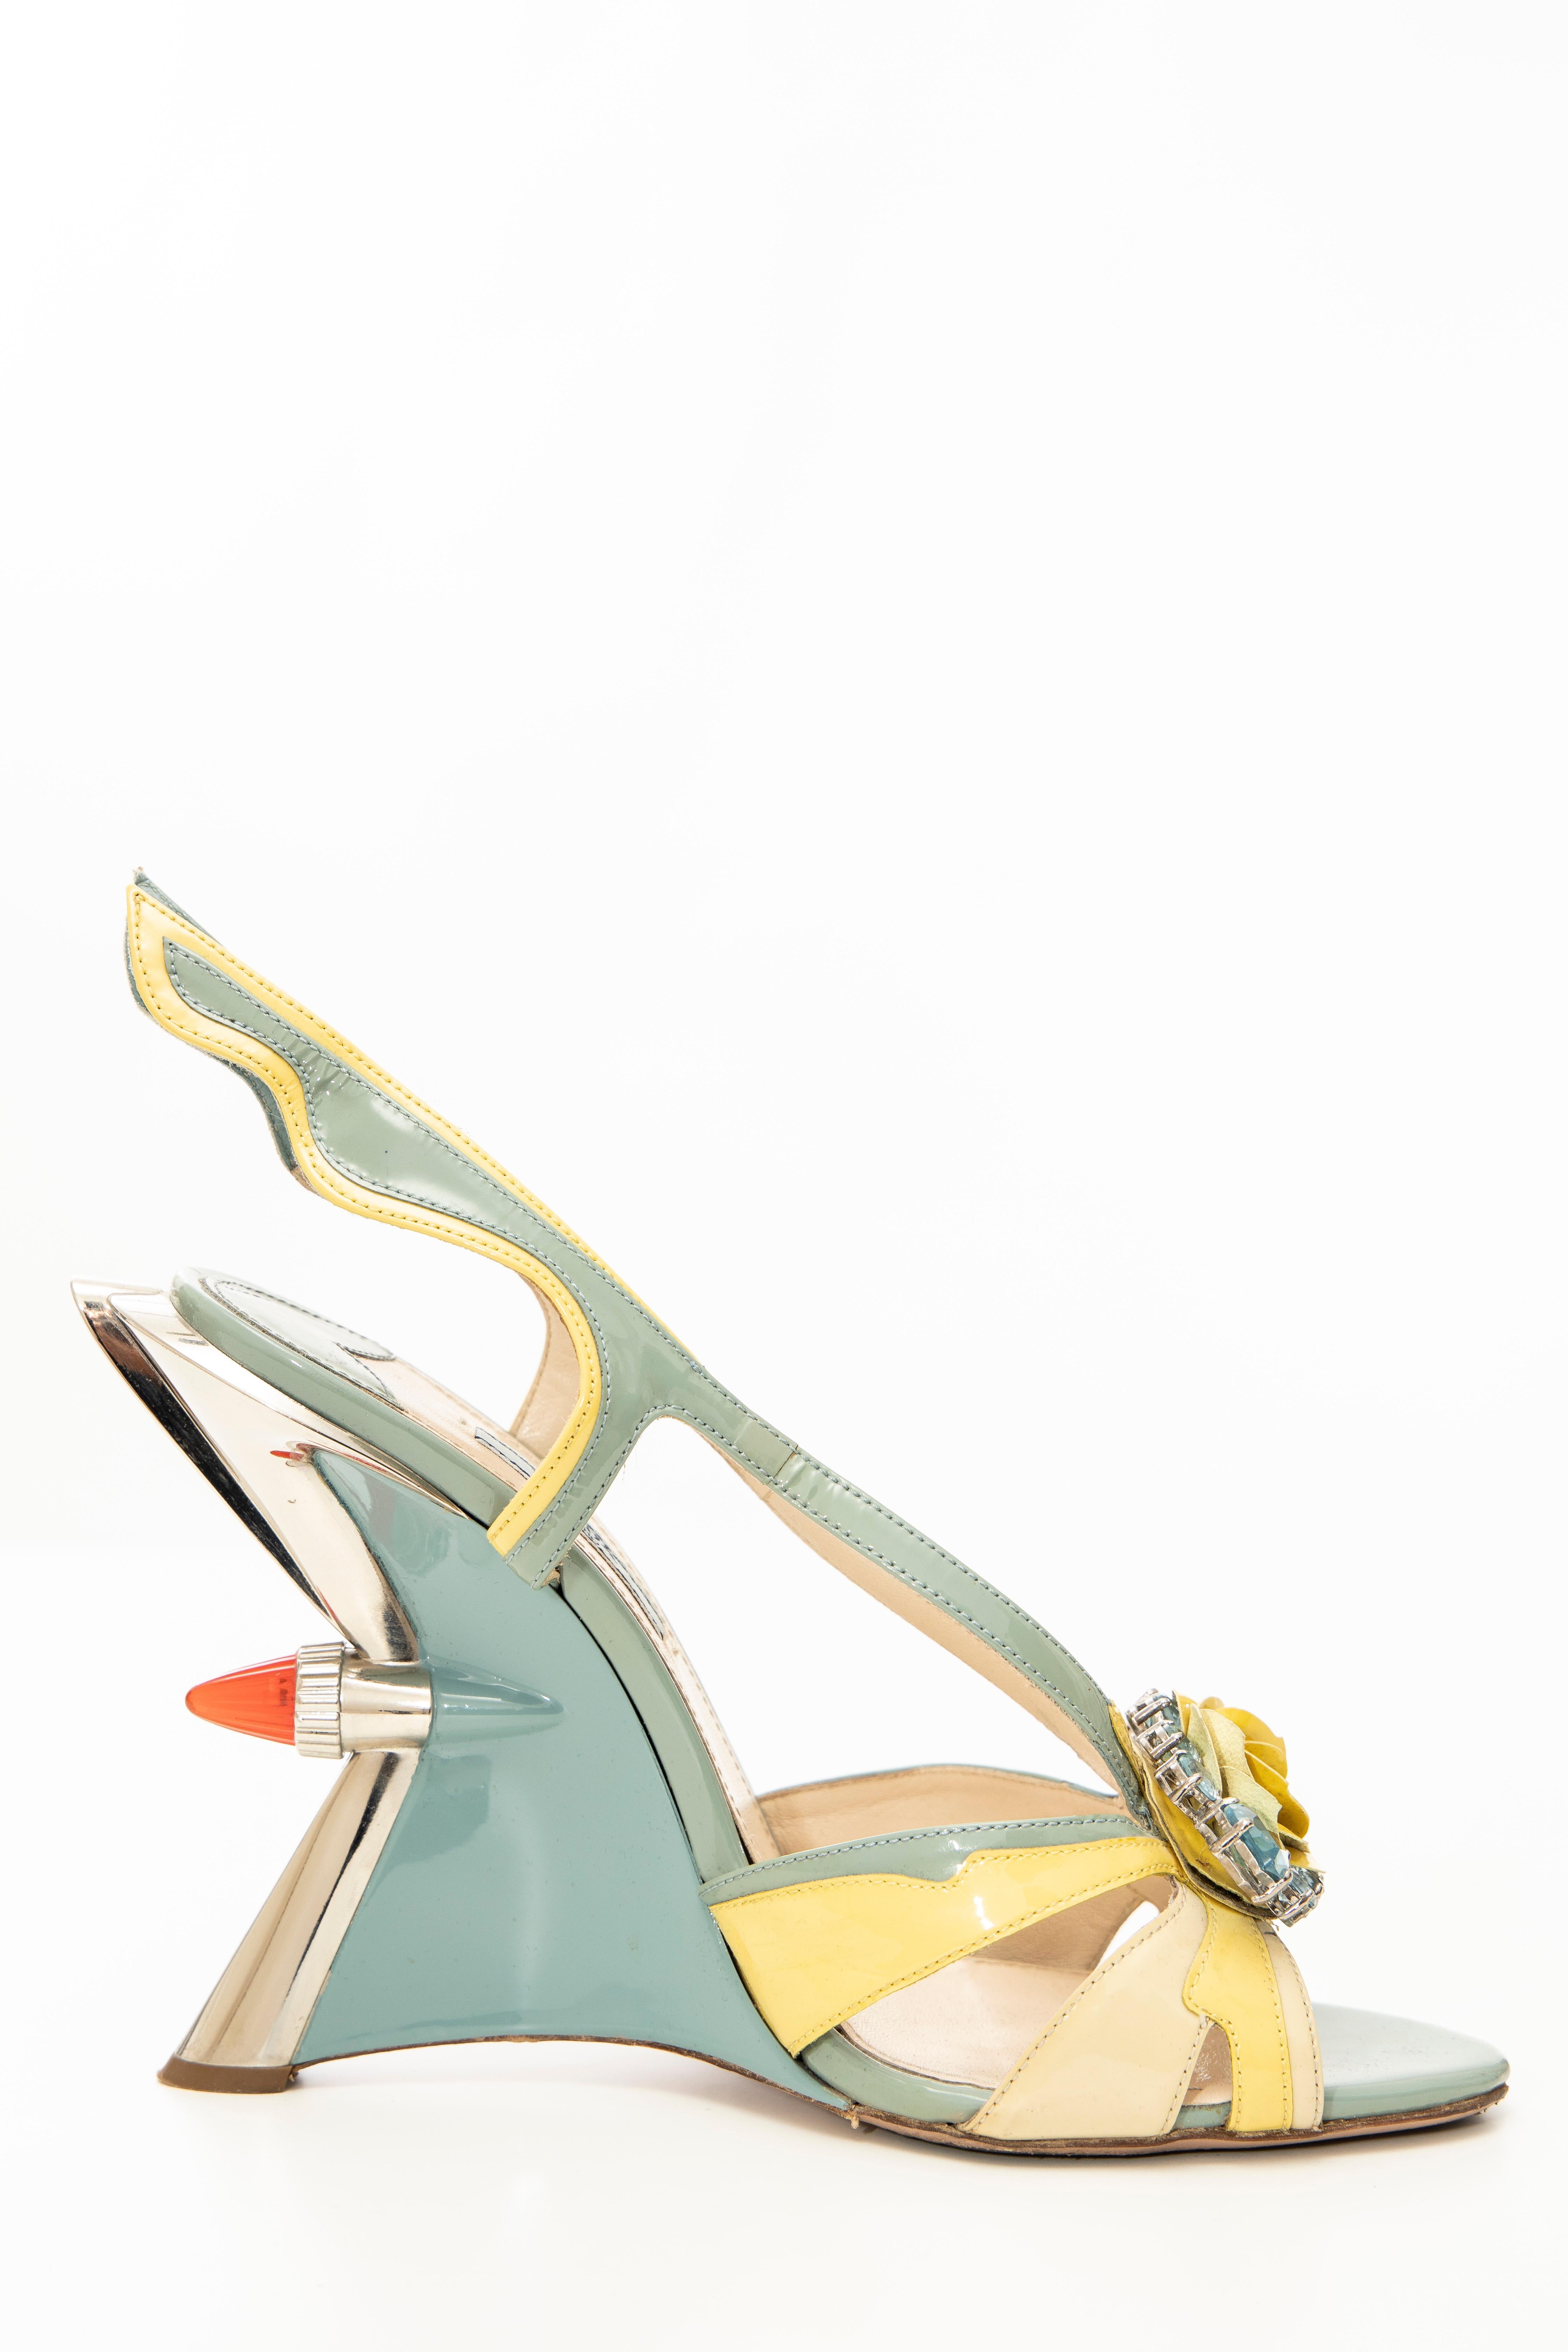 prada 2012 tail light high heels for sale